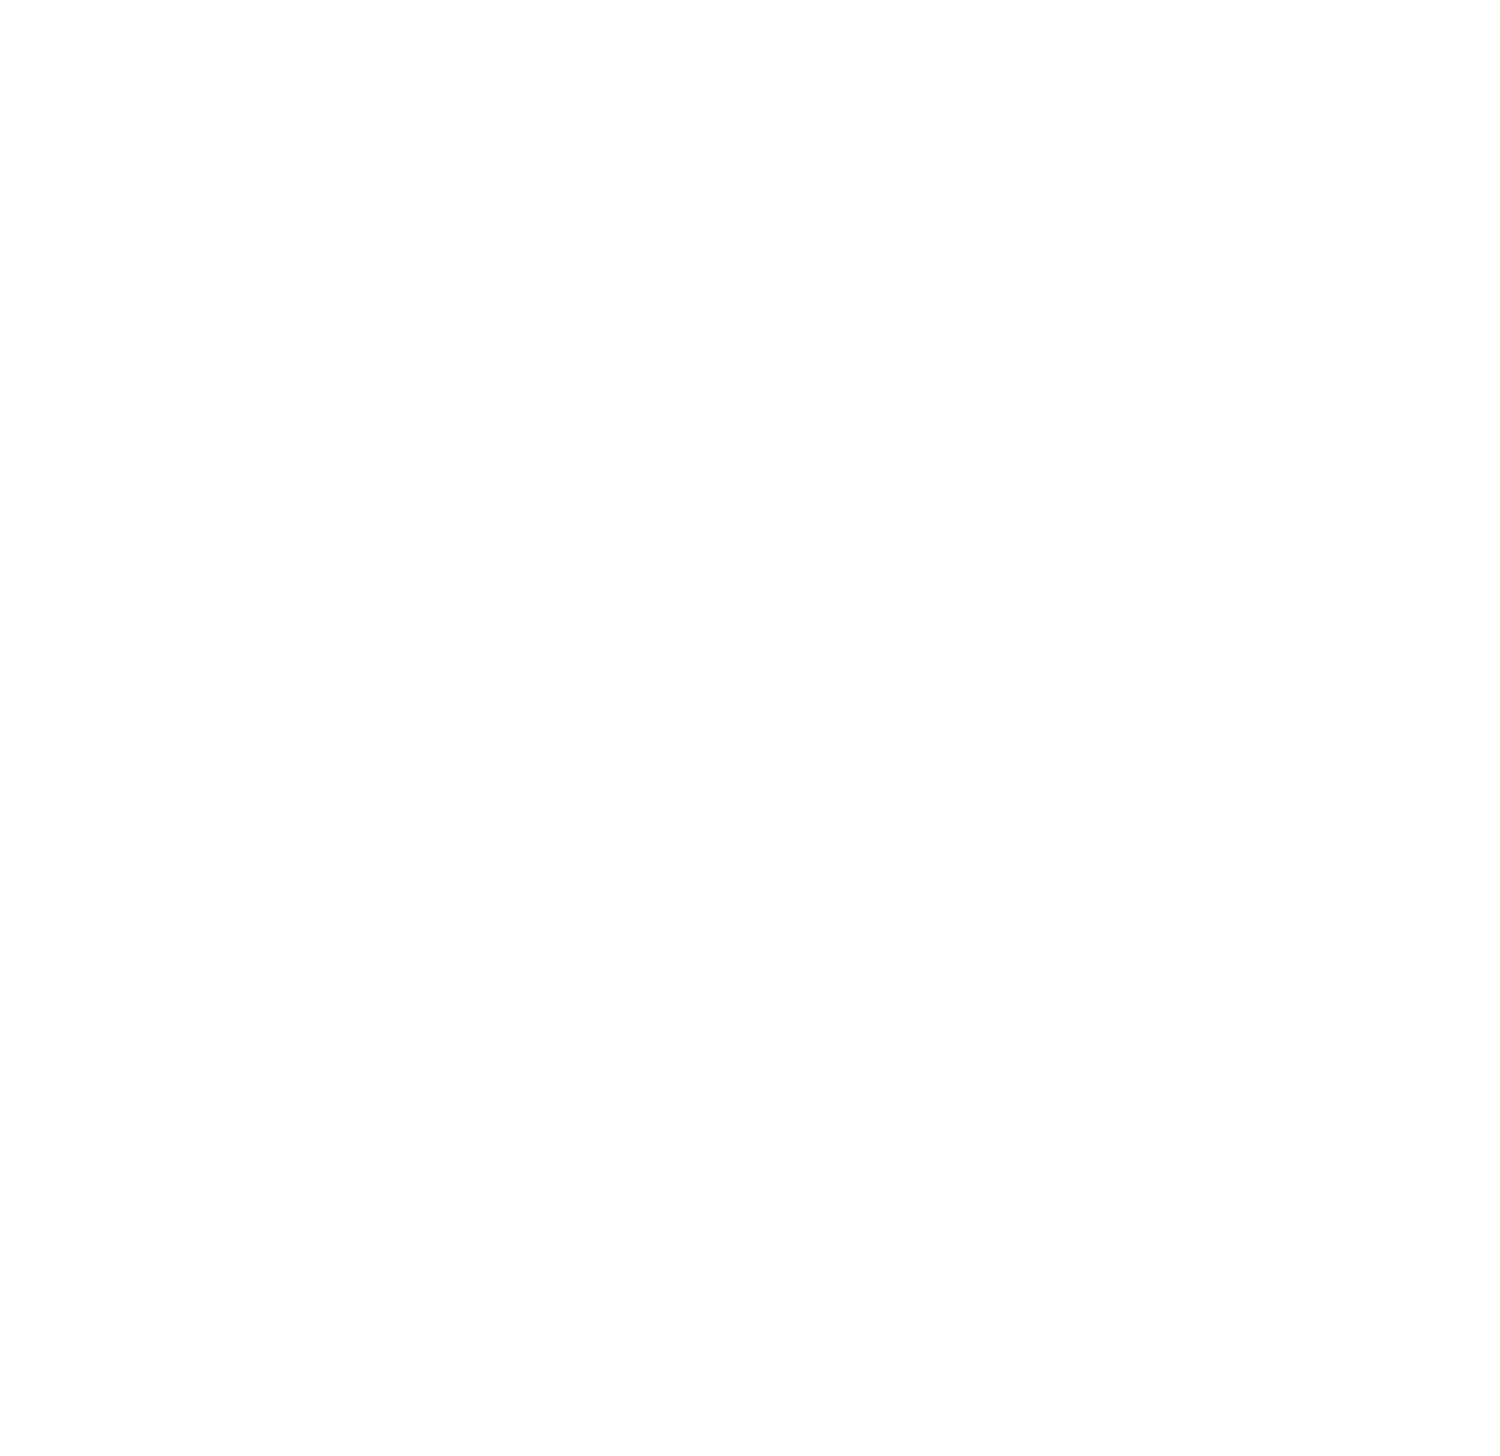 Greg Aultman Furniture